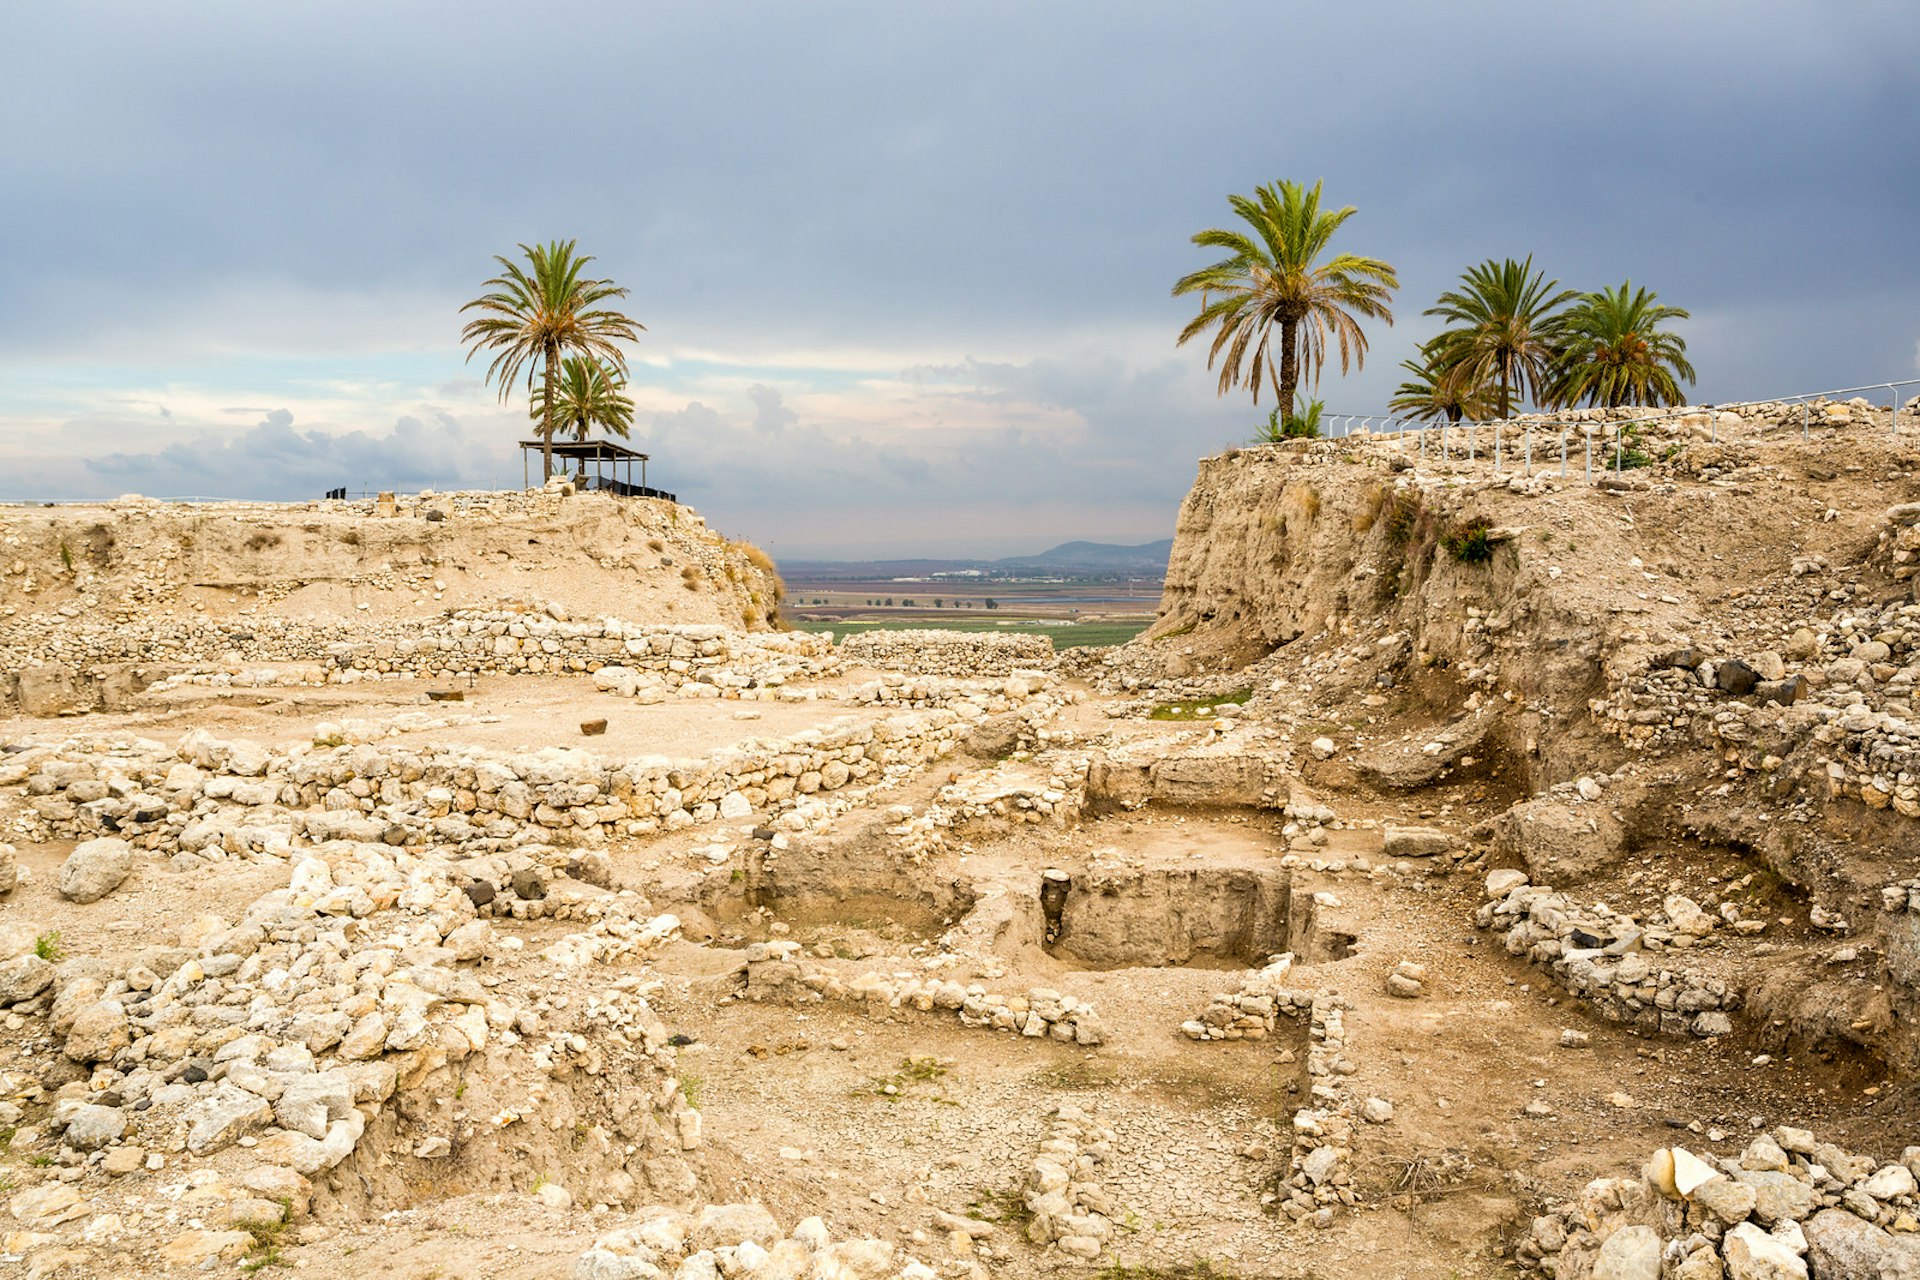 Ruins of historic Tel Megiddo, Jezreel Valley, Israel. Image by Sopotnicki / Shutterstock